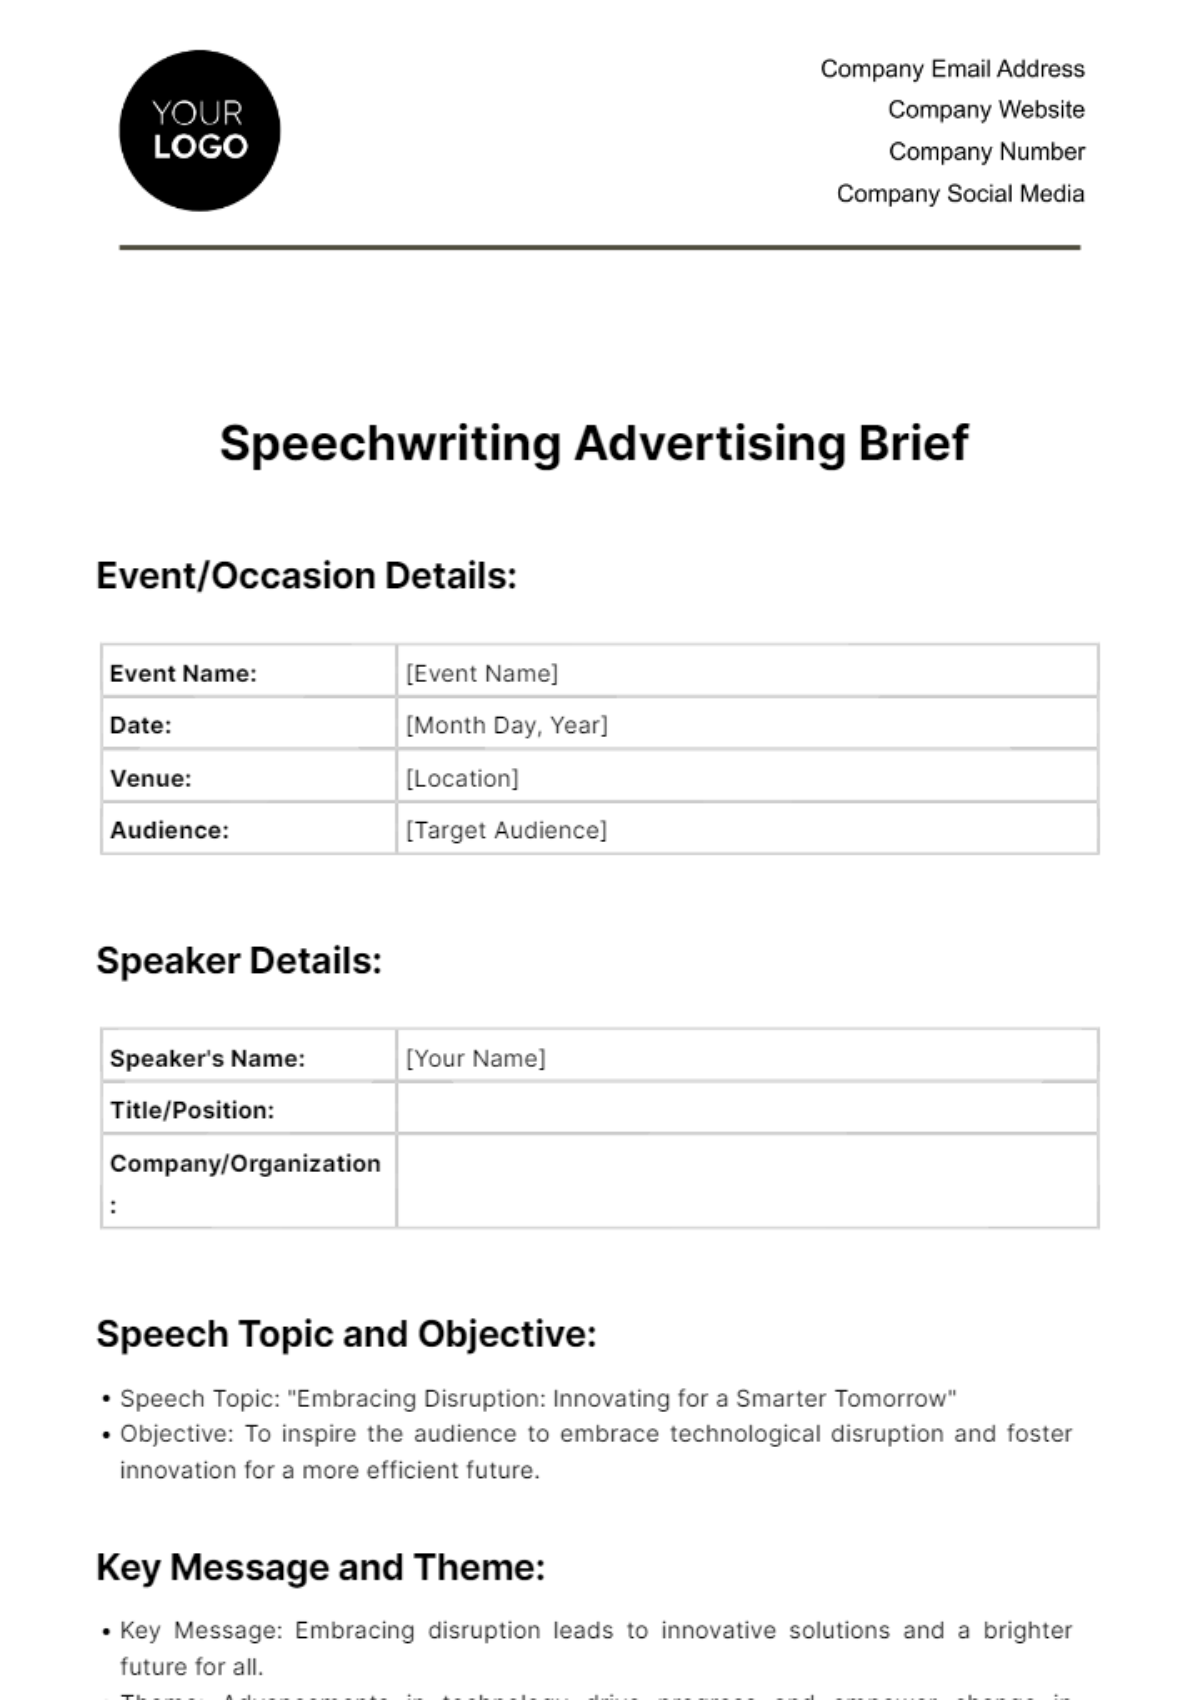 Speechwriting Advertising Brief Template